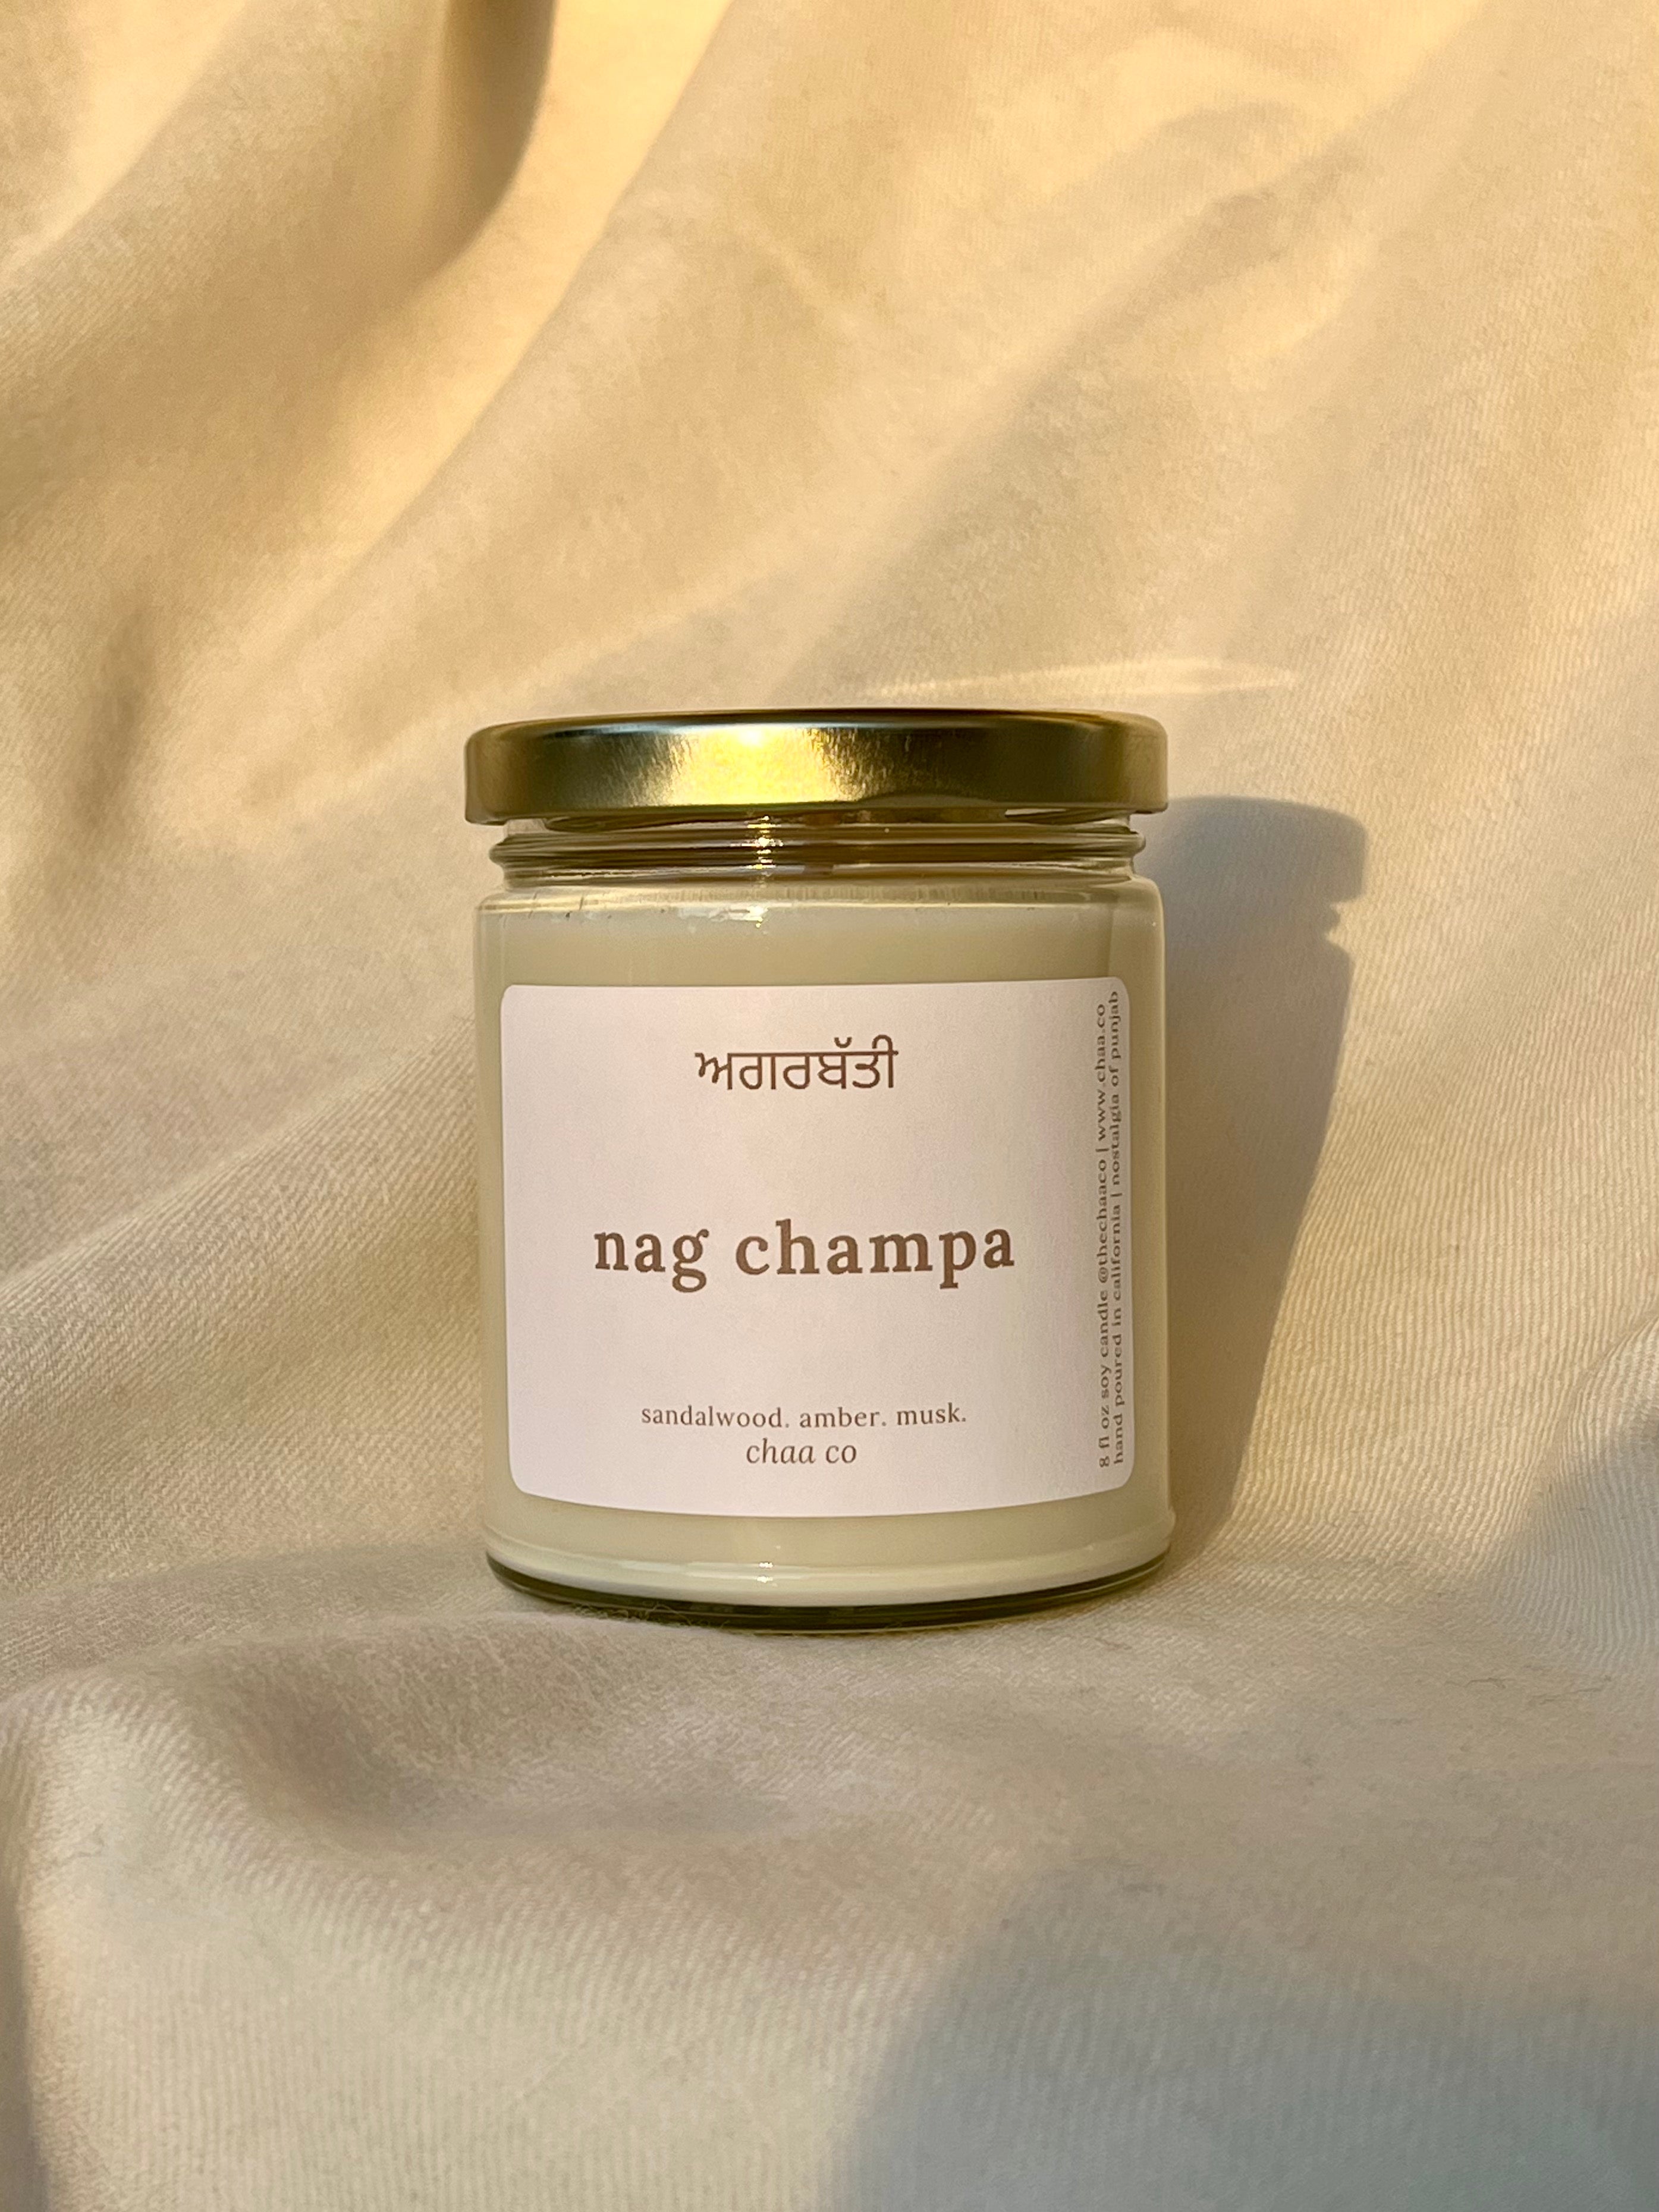 Nag Champa- candle